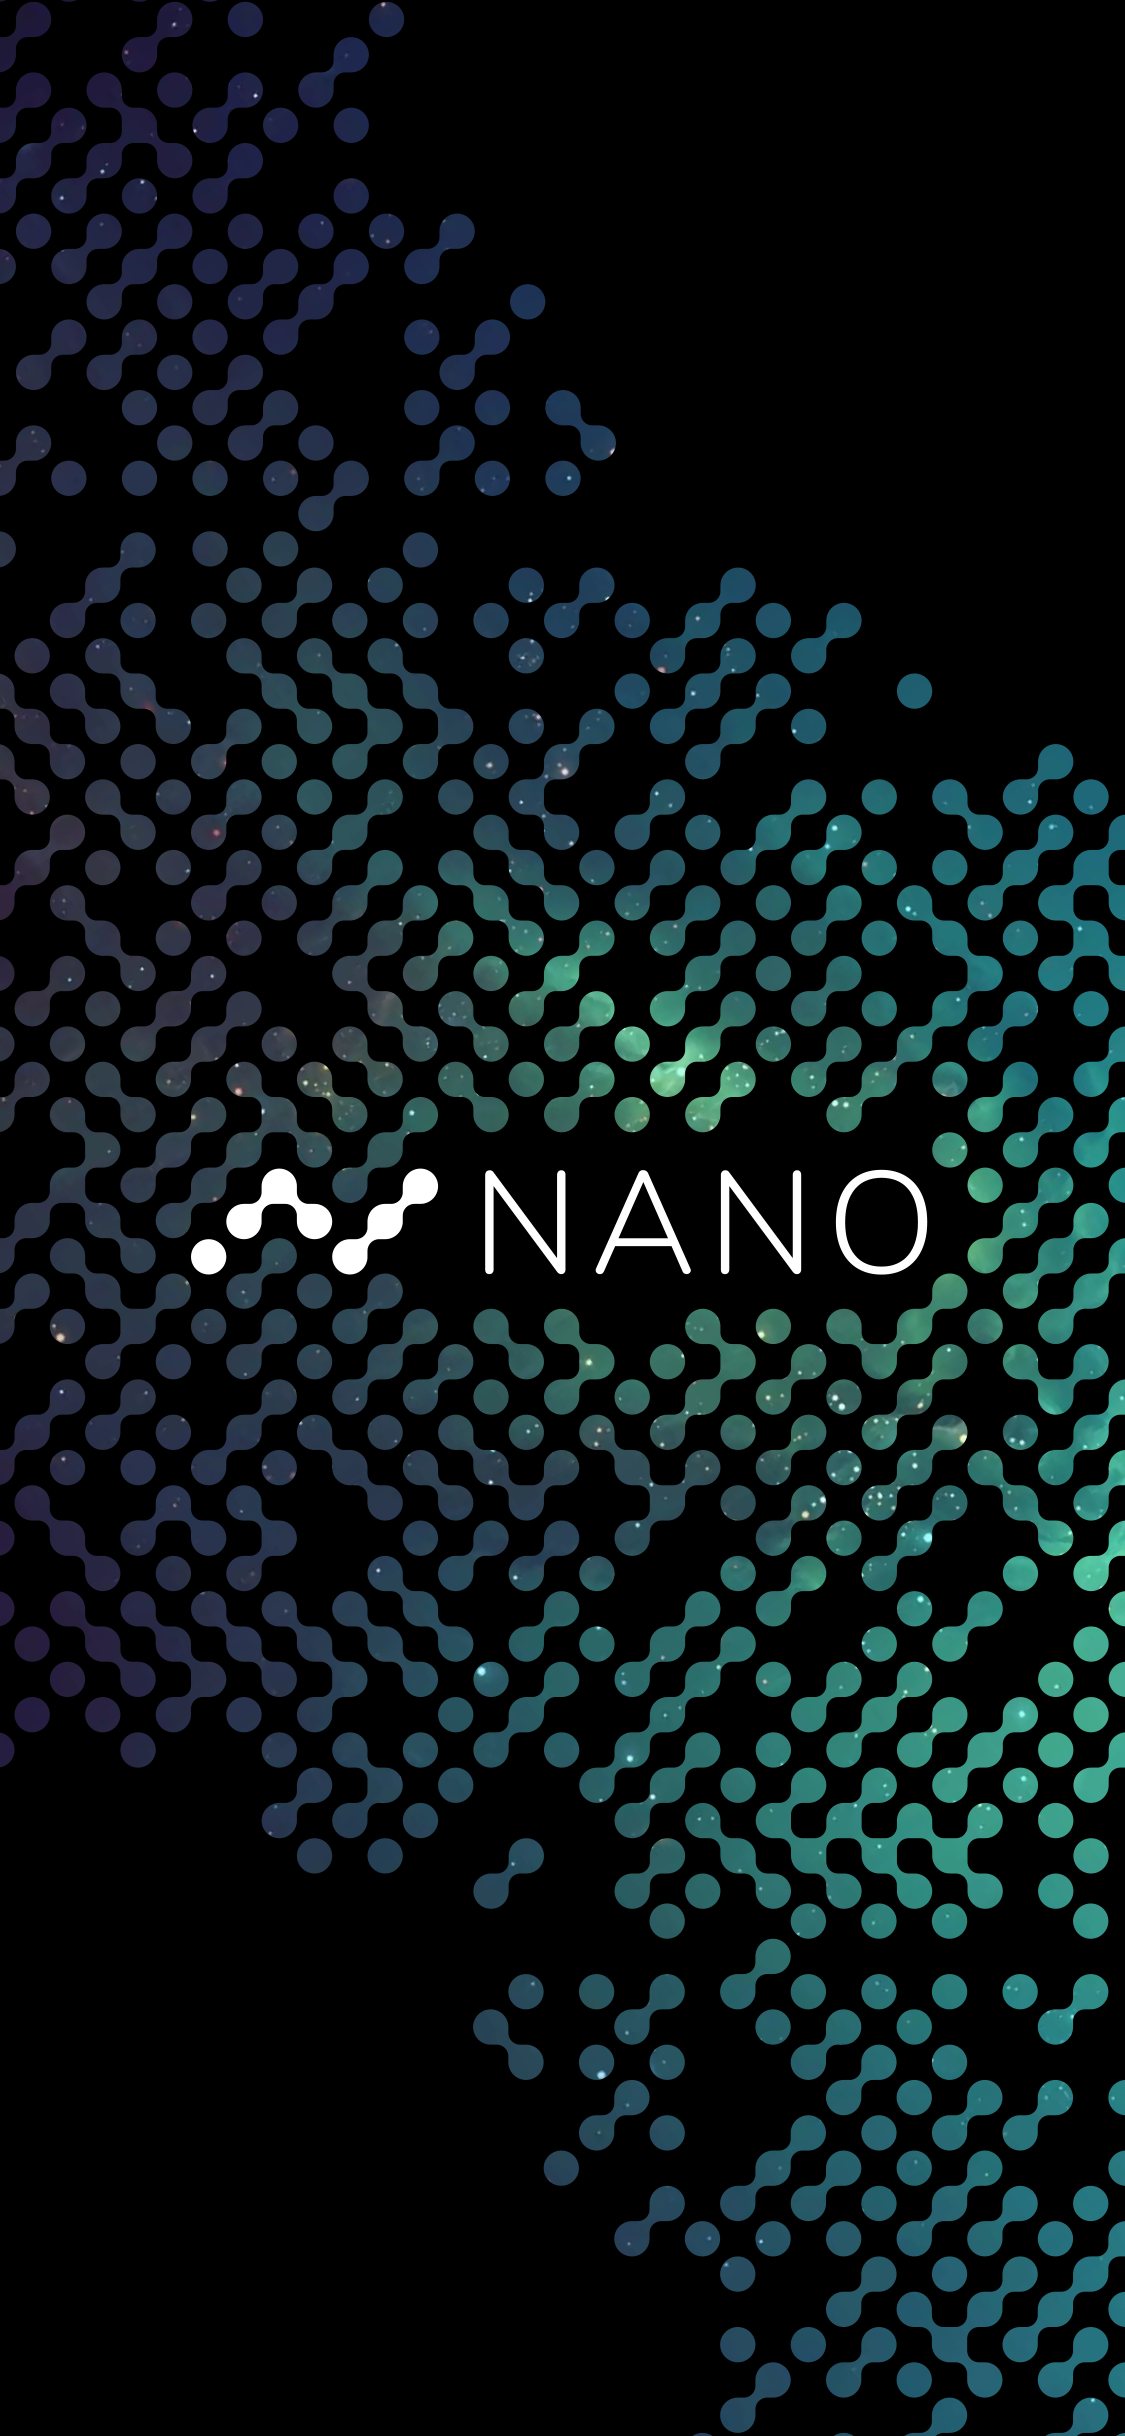 Xrb - Nano , HD Wallpaper & Backgrounds